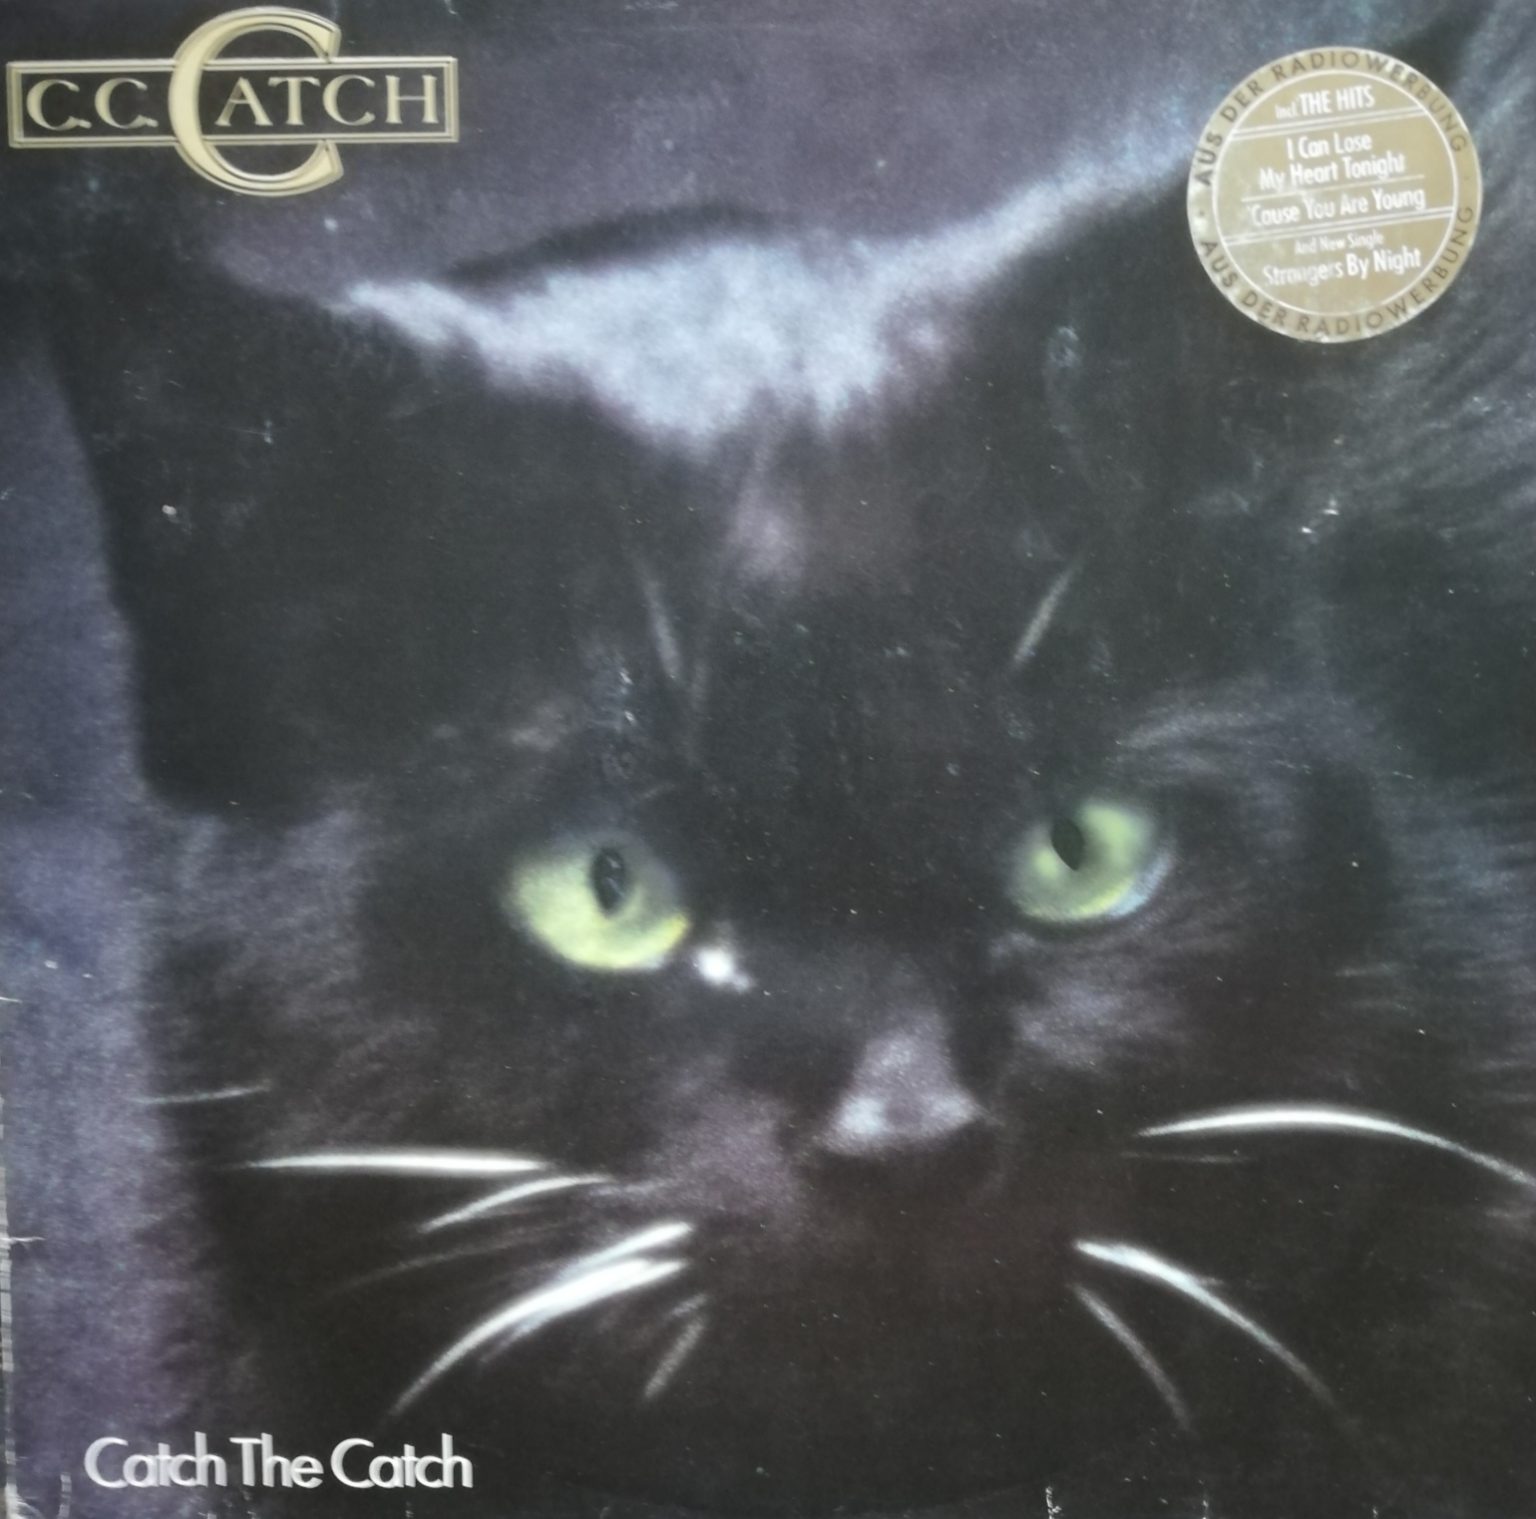 C.C. Catch – Catch The Catch LP